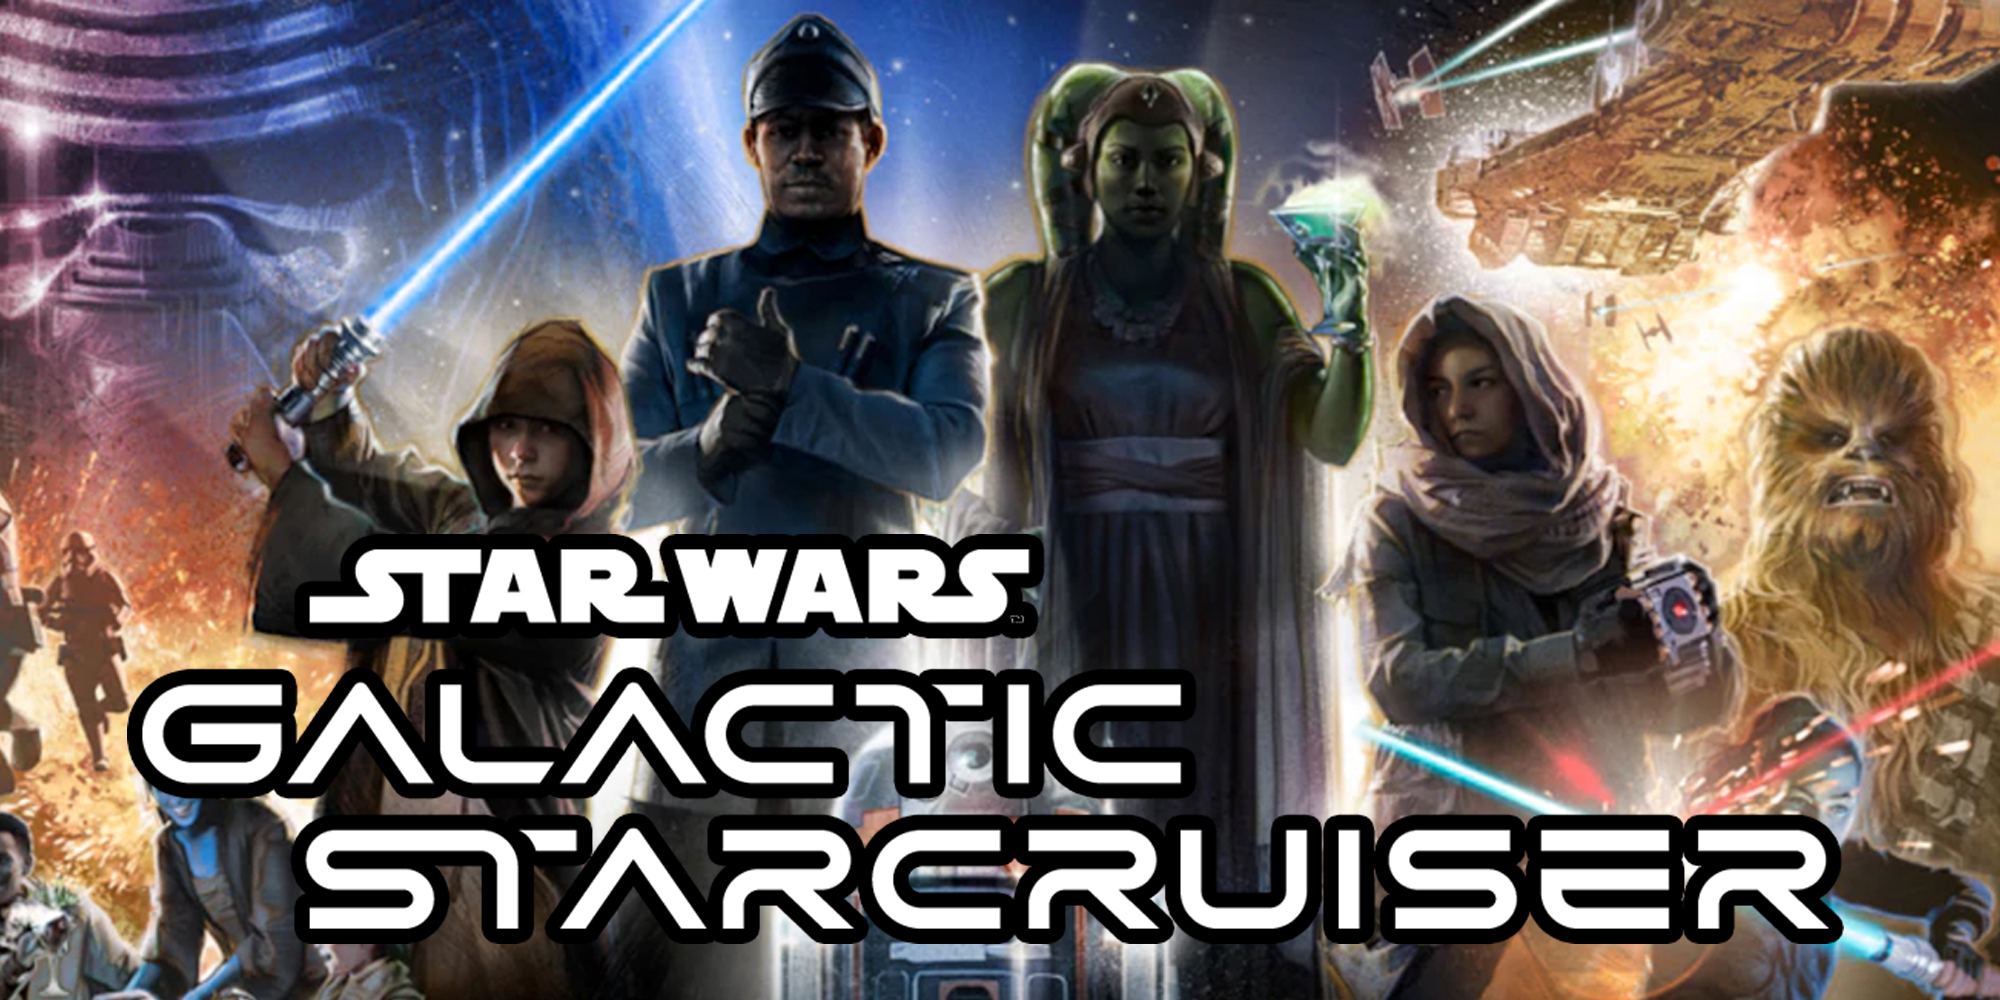 Watch The Star Wars Galactic Starcruiser Video